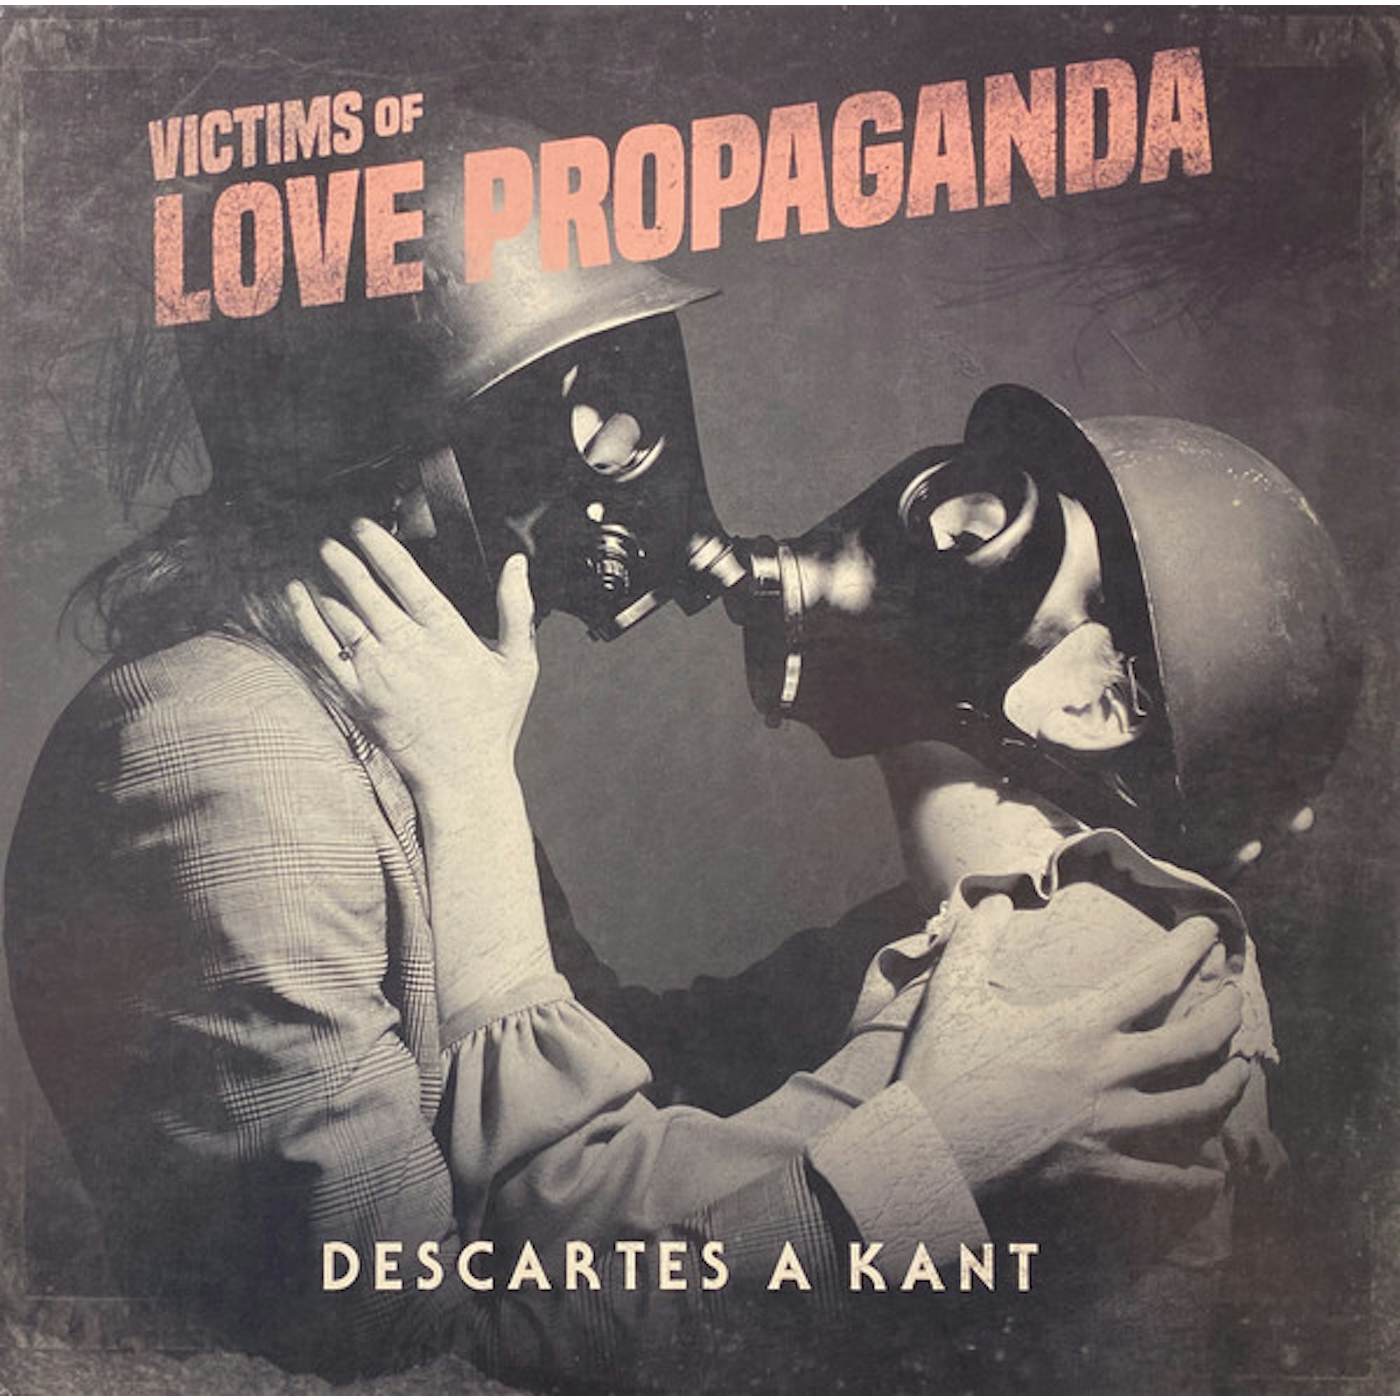 Descartes A Kant Victims of Love Propaganda Vinyl Record